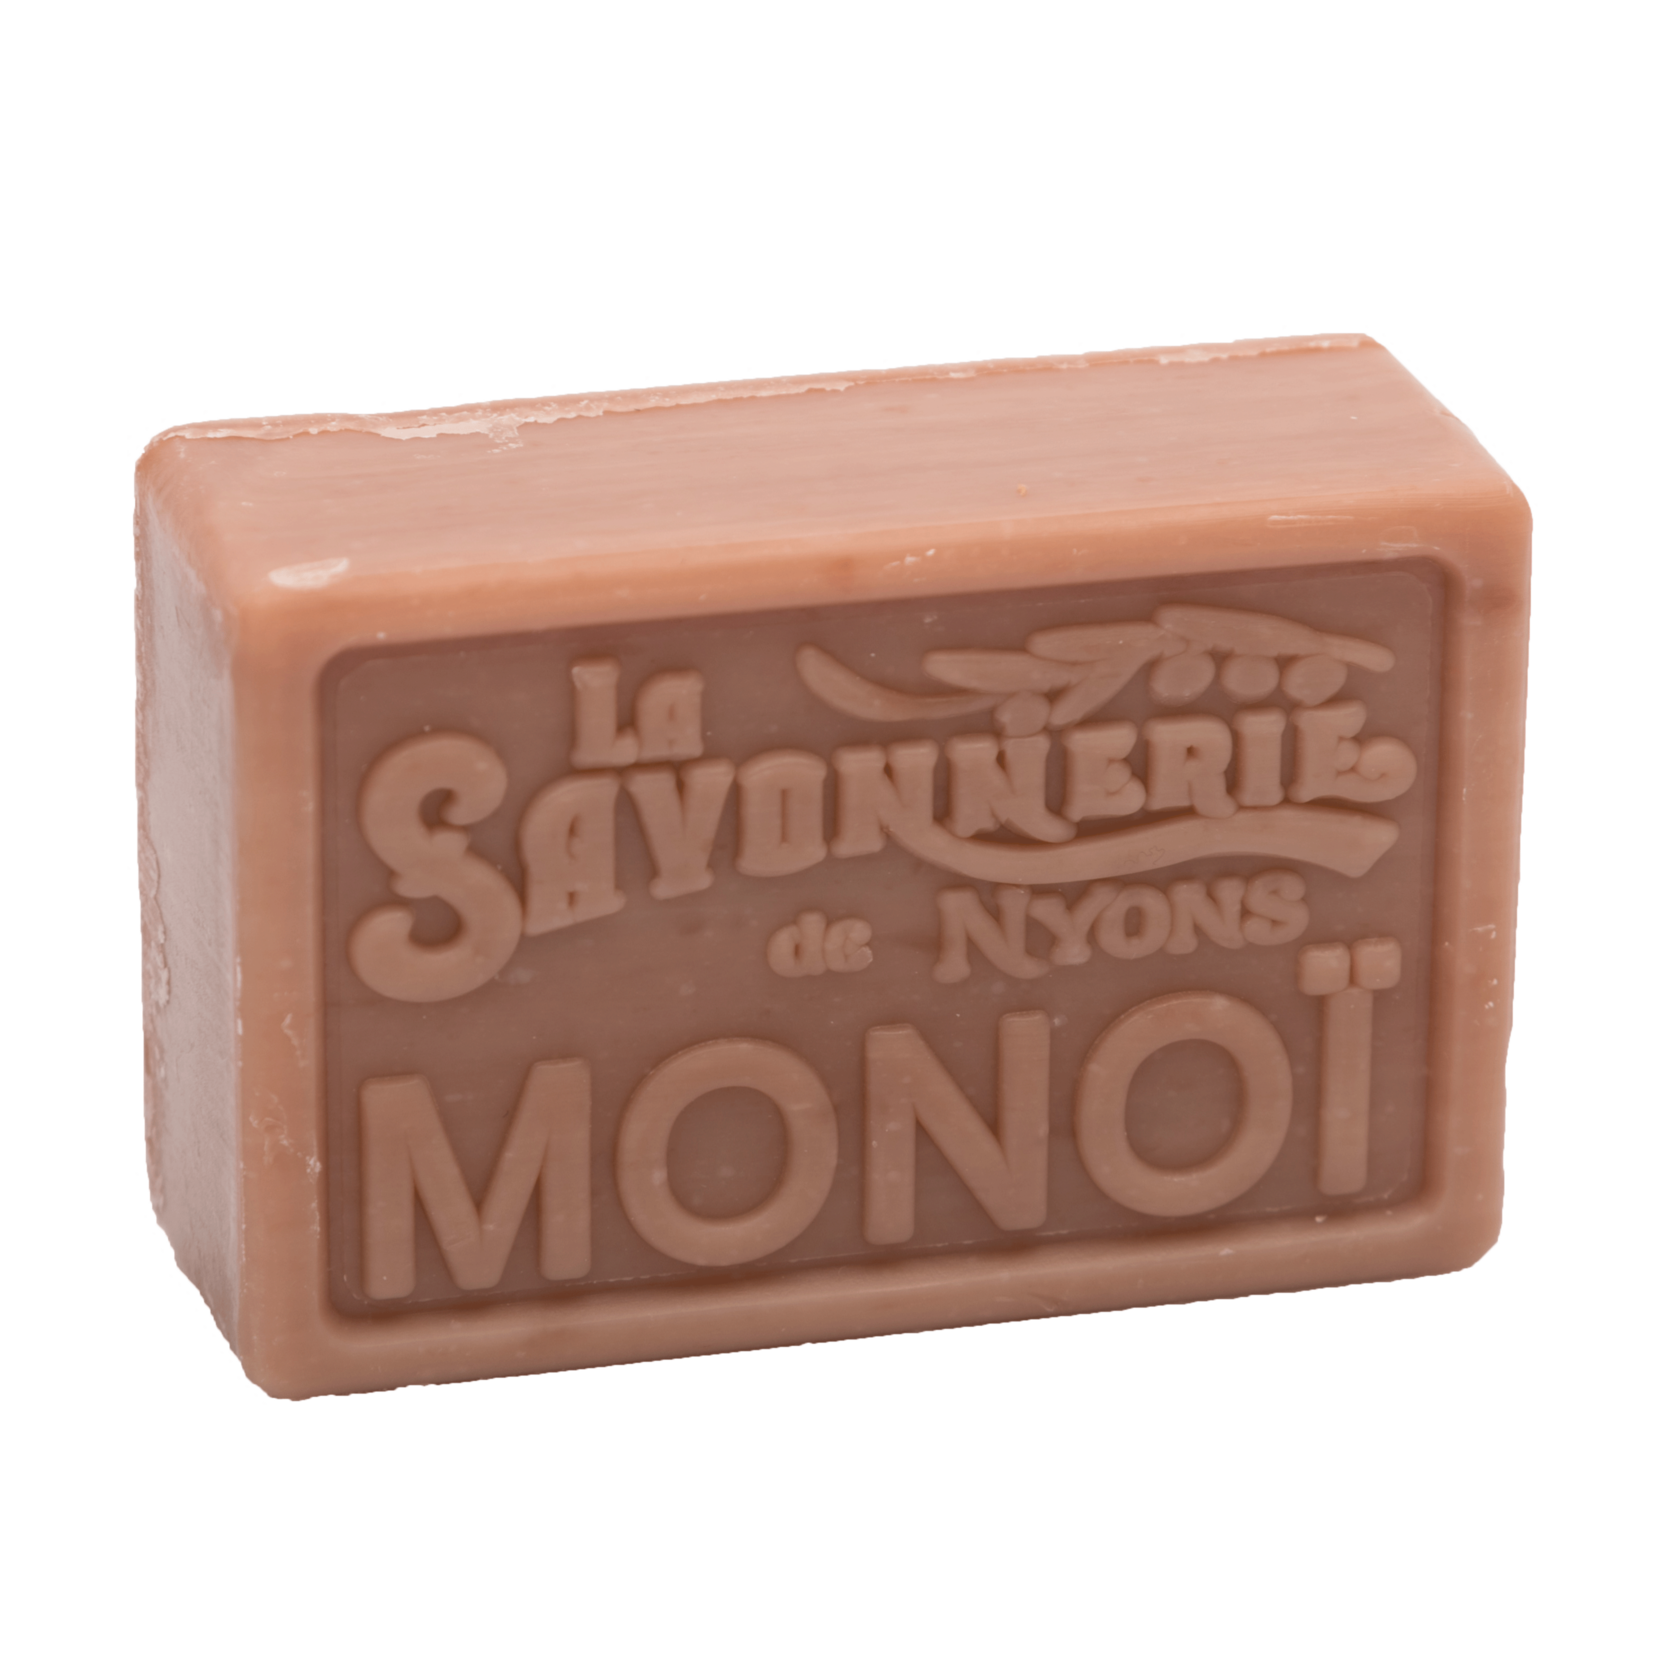 Brown bar of soap that reads La Savonnerie de Nyons Monoi.